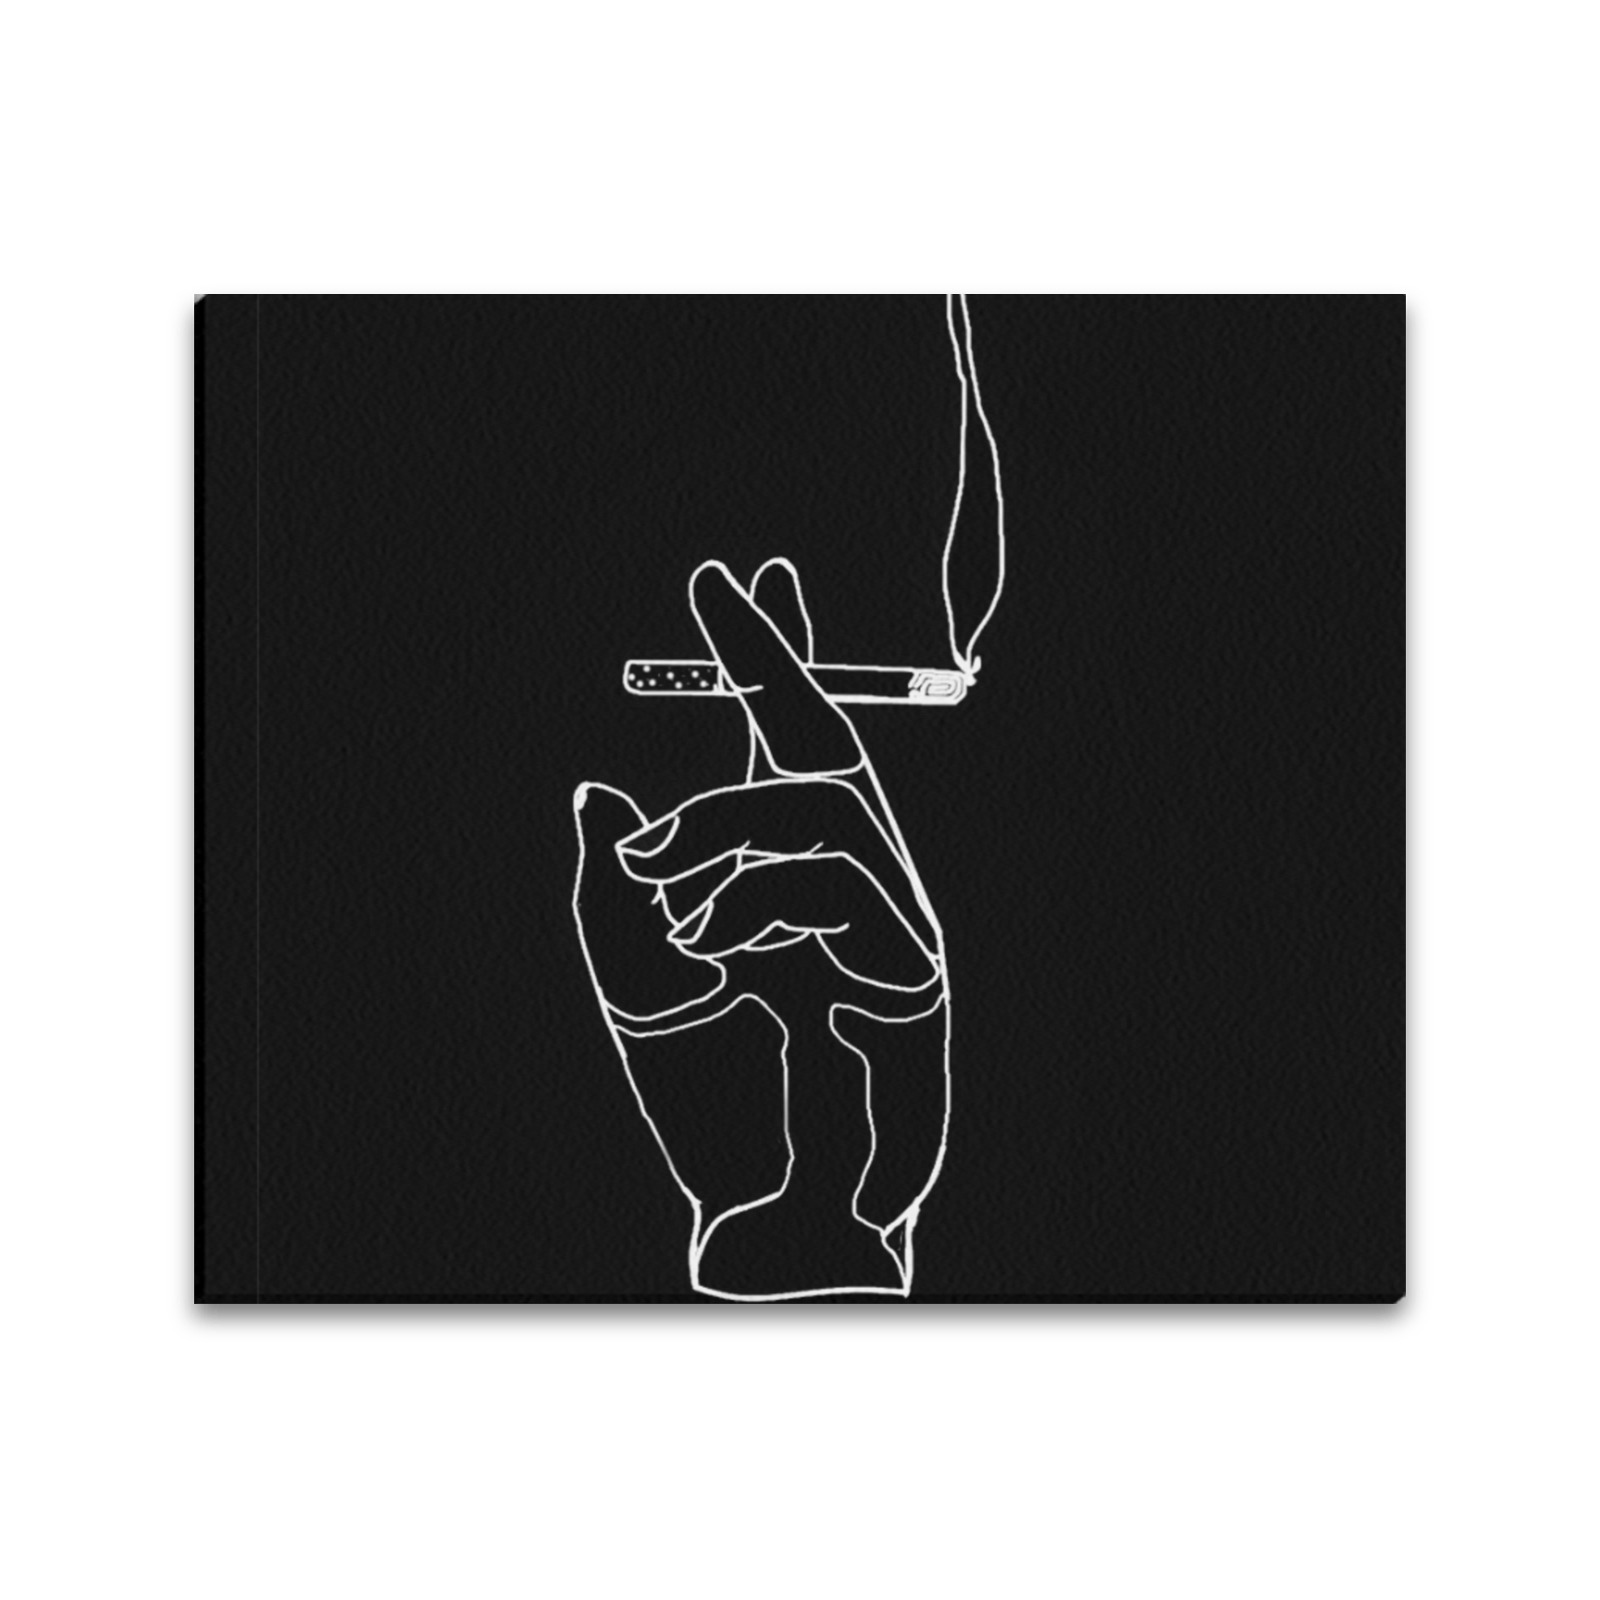 Smoking by Fetishworld Frame Canvas Print 24"x20"